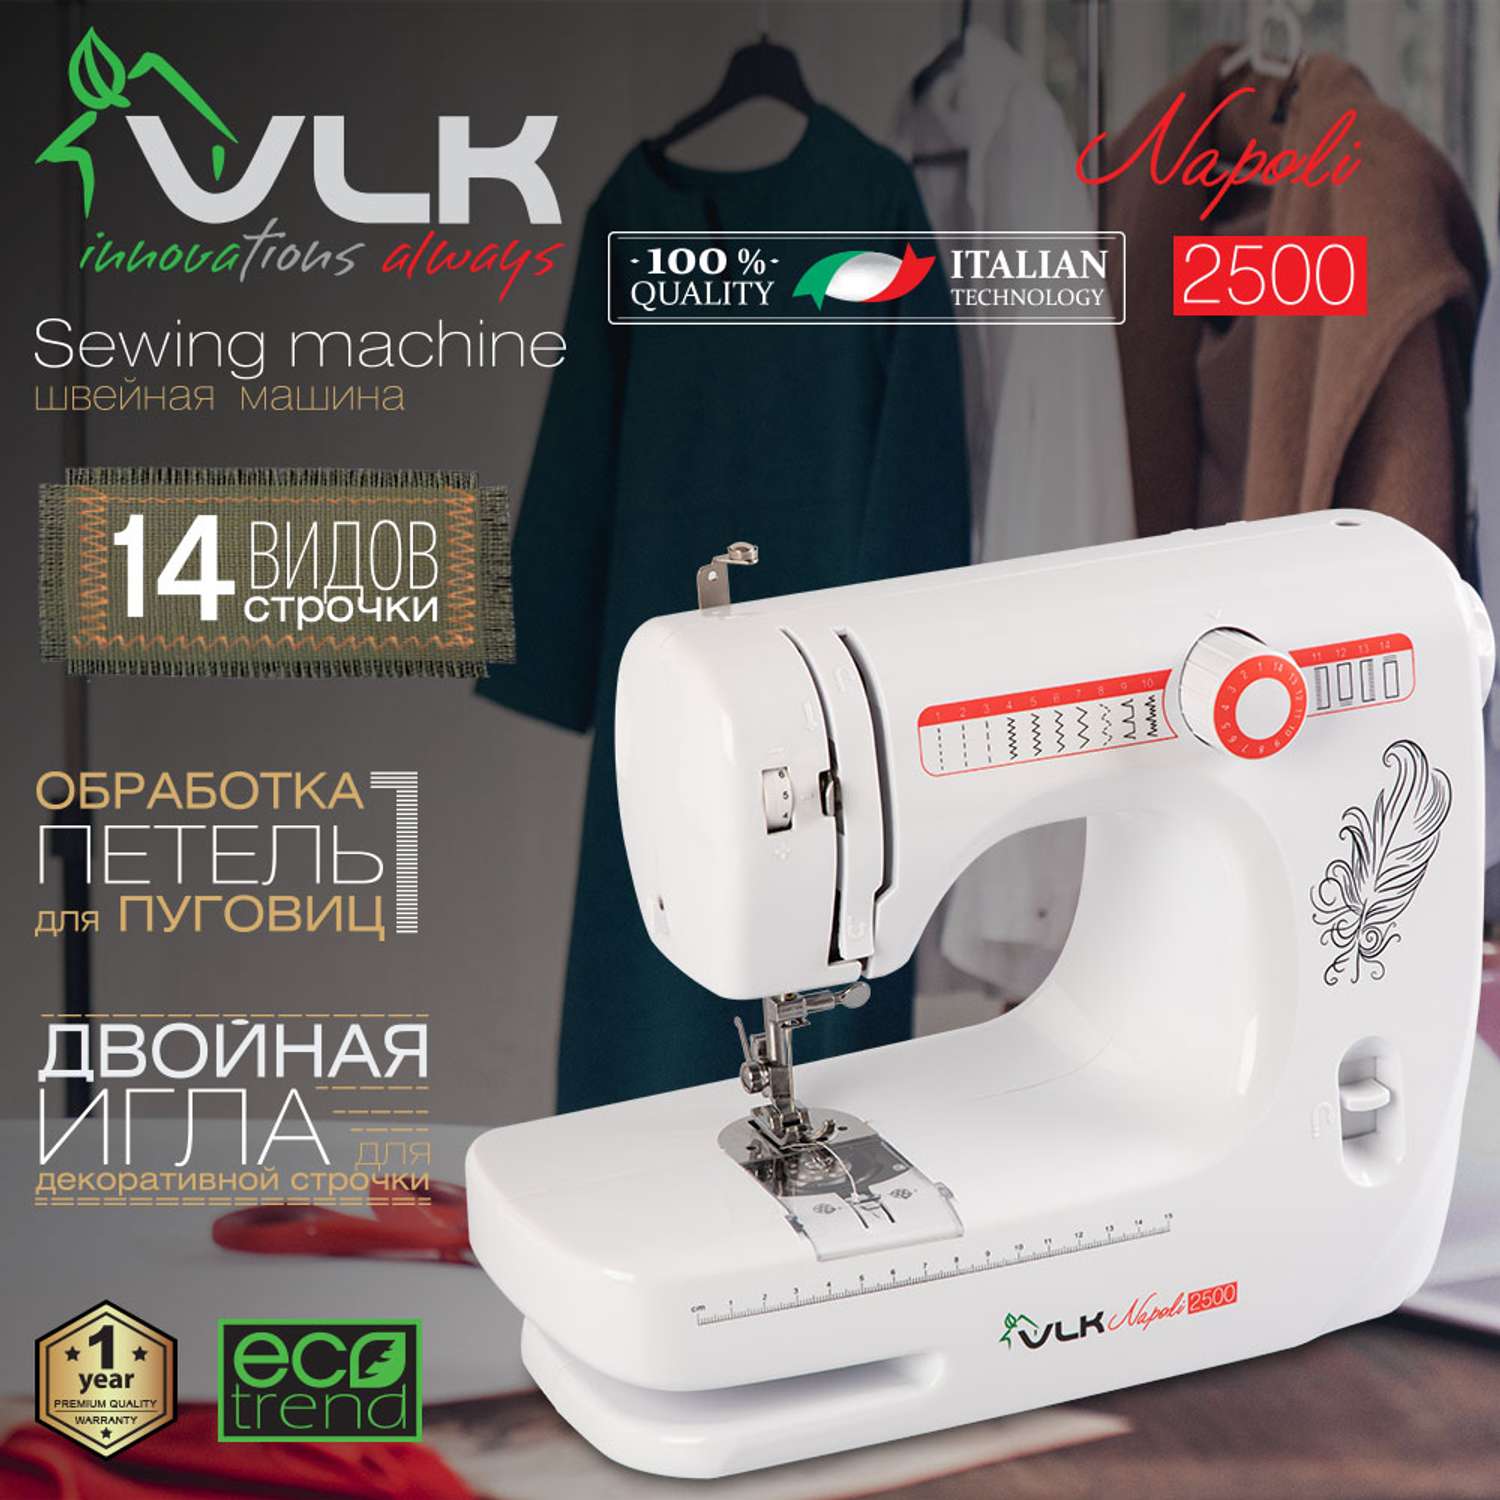 Швейная машина VLK Napoli 2500 - фото 2